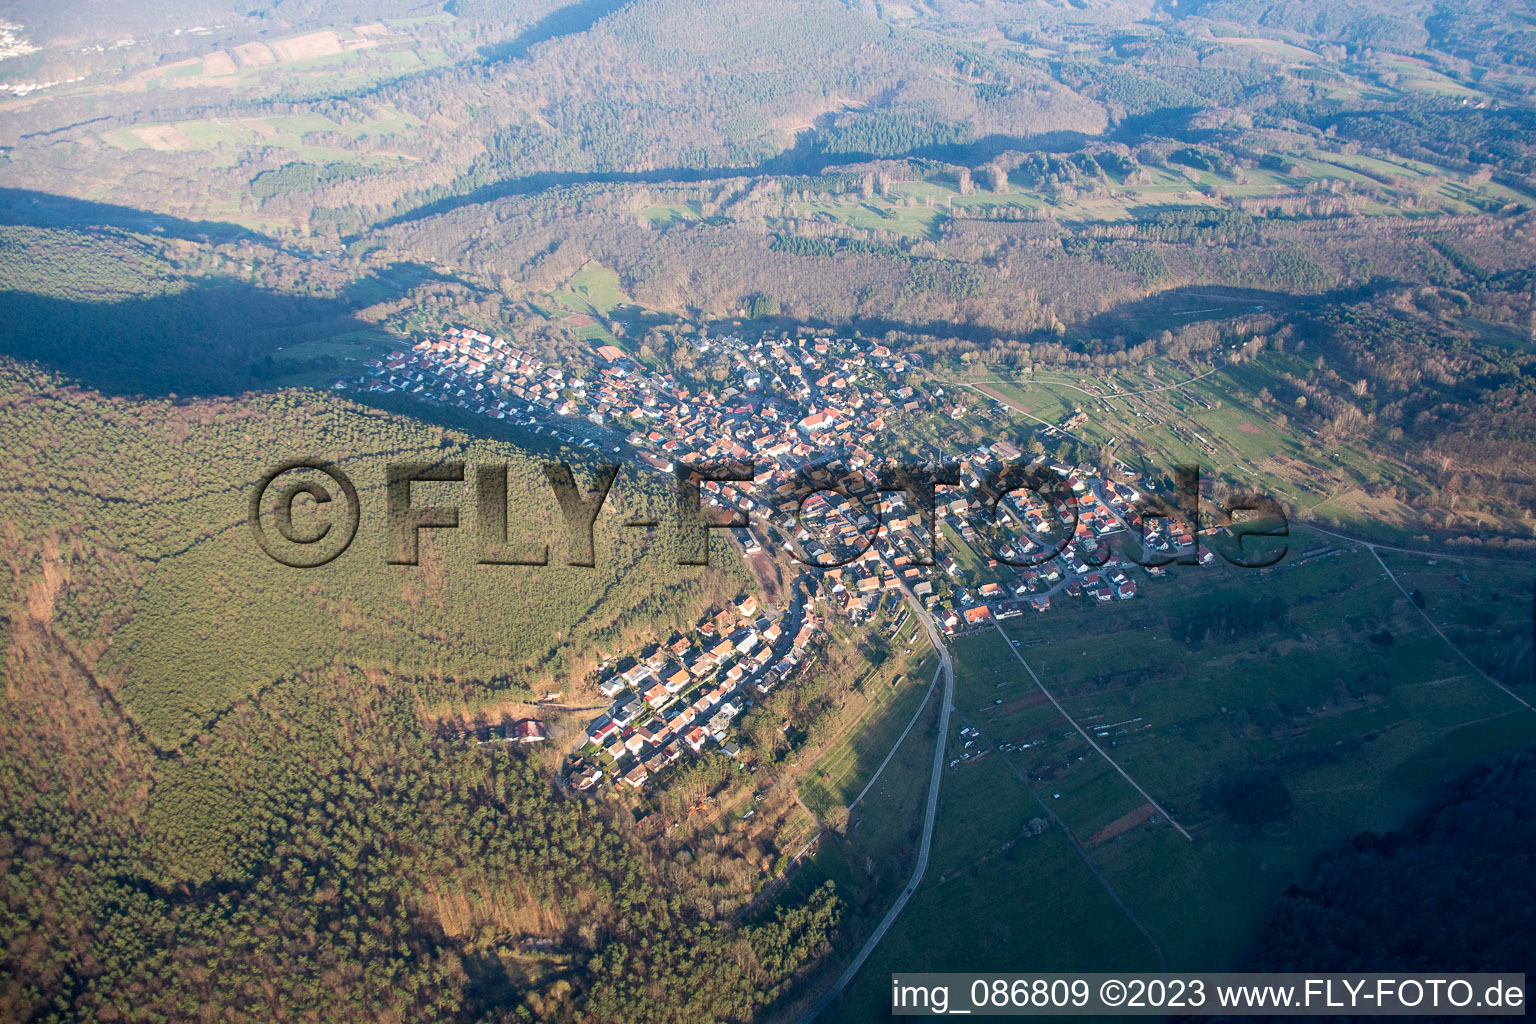 Aerial view of Wernersberg in the state Rhineland-Palatinate, Germany